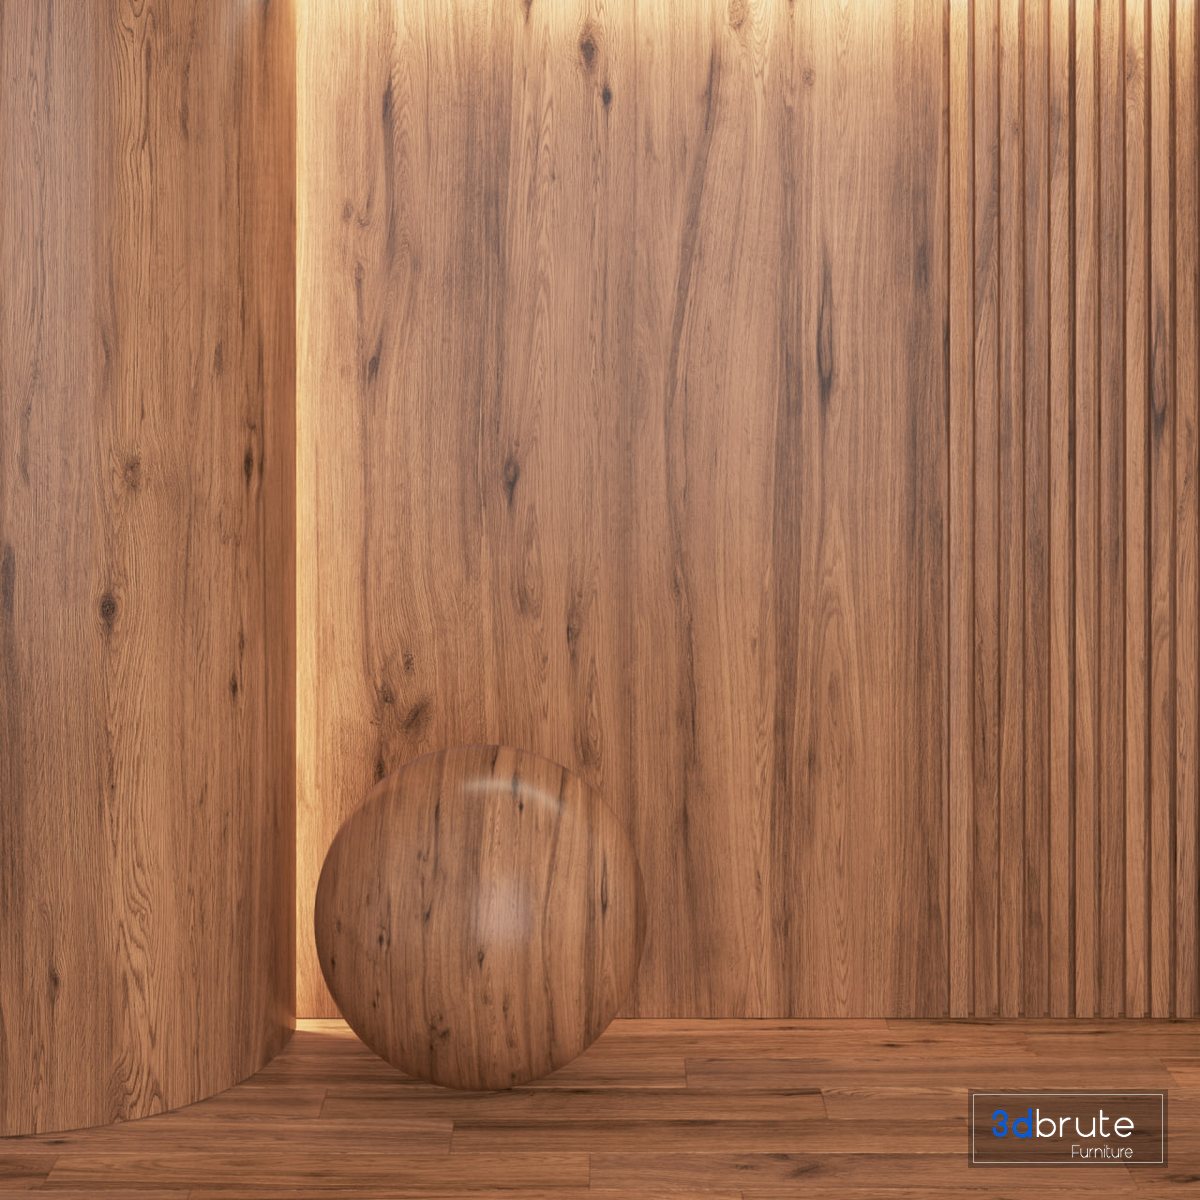 Walnut Wood Veneer 01 Seamless PBR Texture